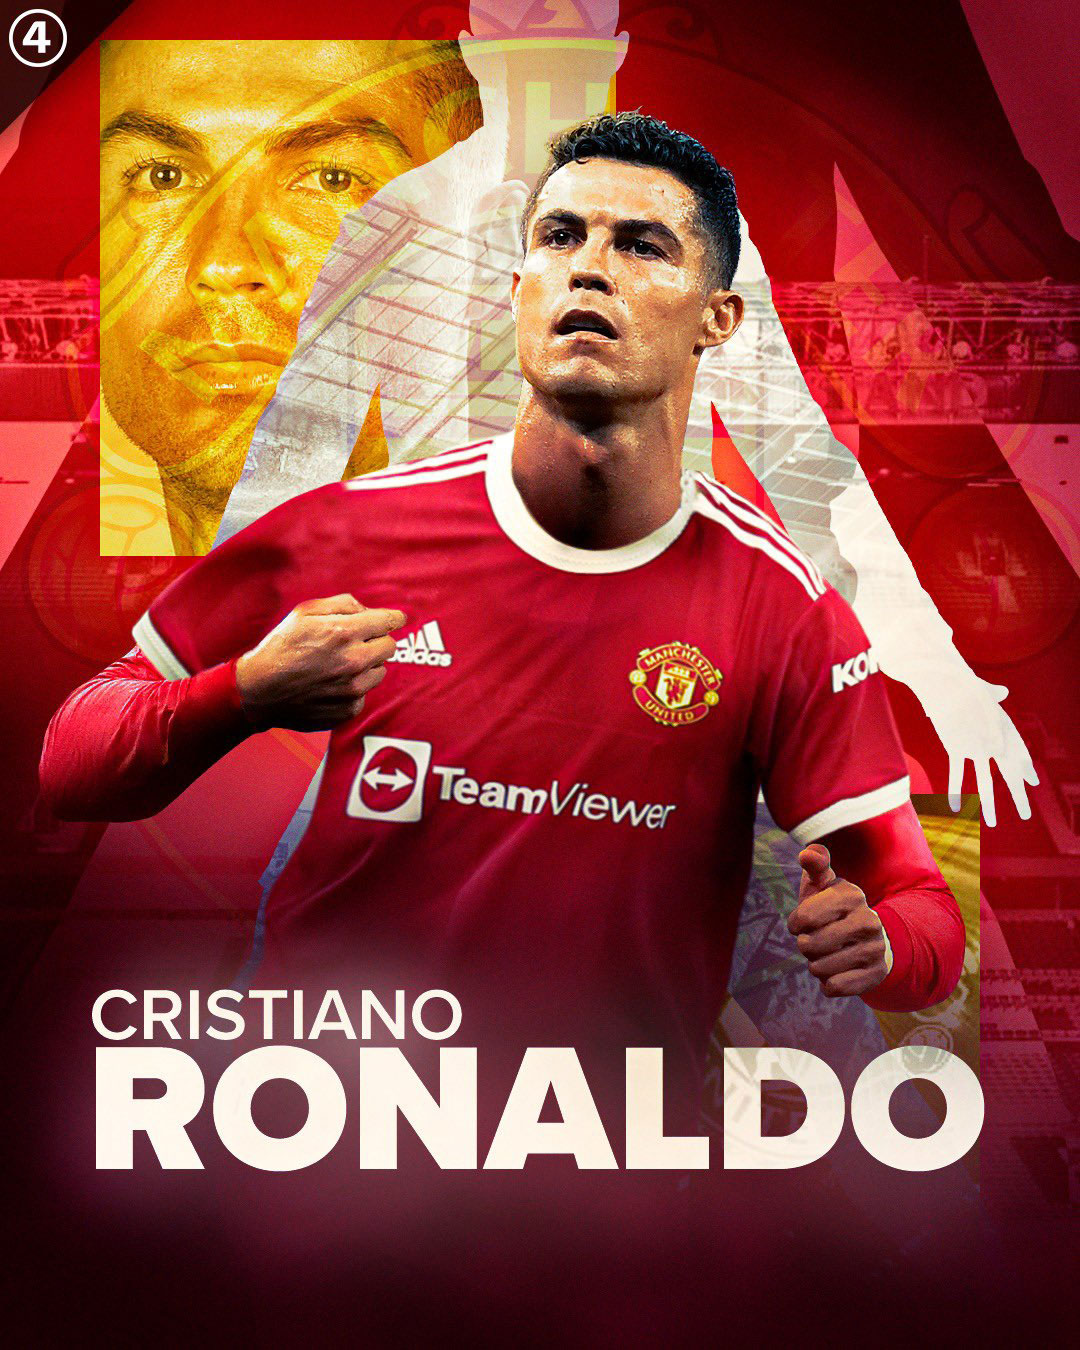 Ronaldo wallpaper hd mobile